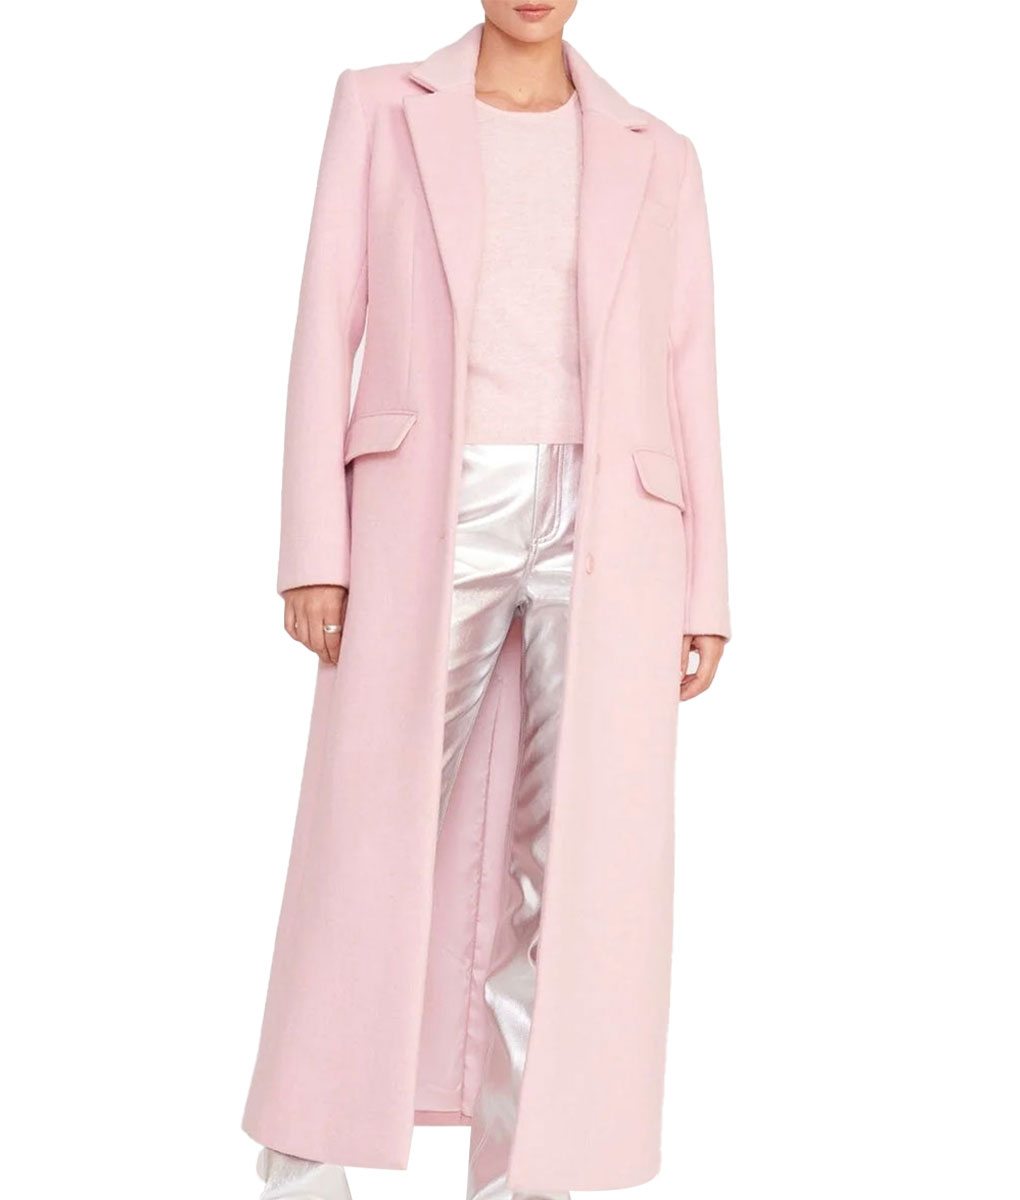 Selena Gomez Rare Beauty Pink Coat (6)